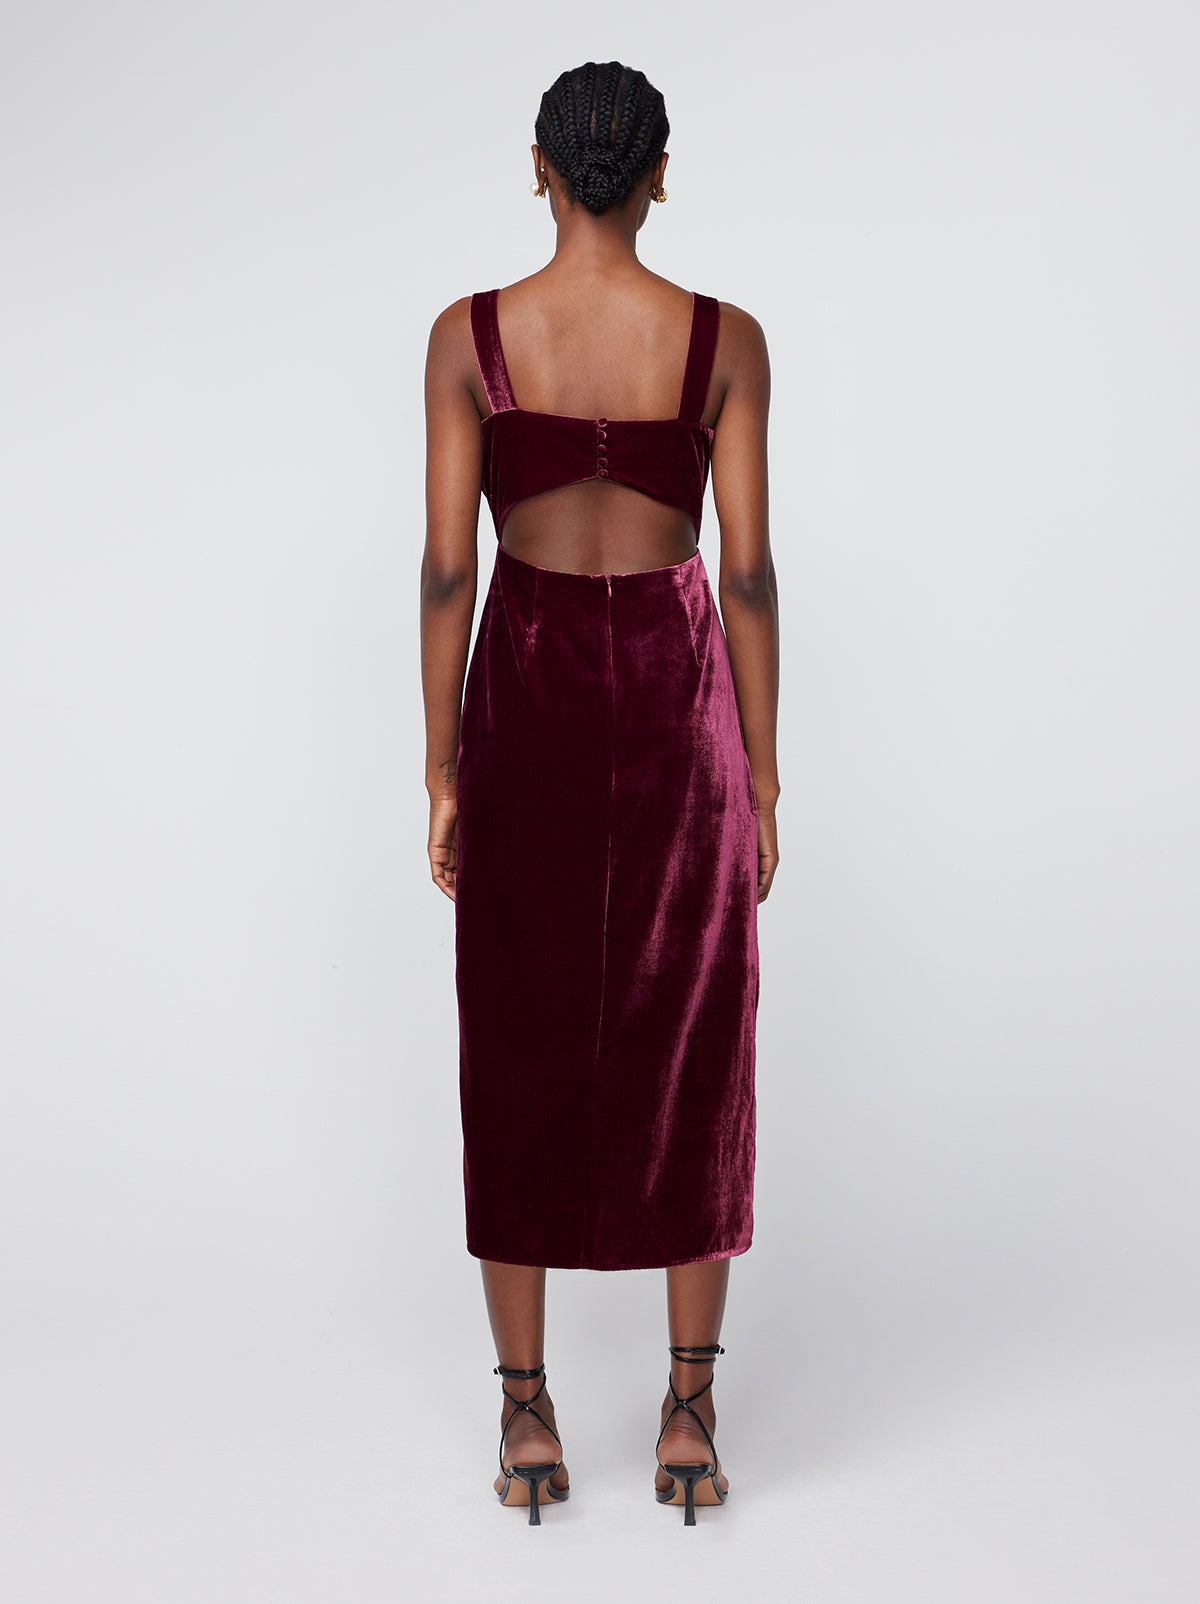 Aretha Burgundy Velvet Dress By KITRI Studio